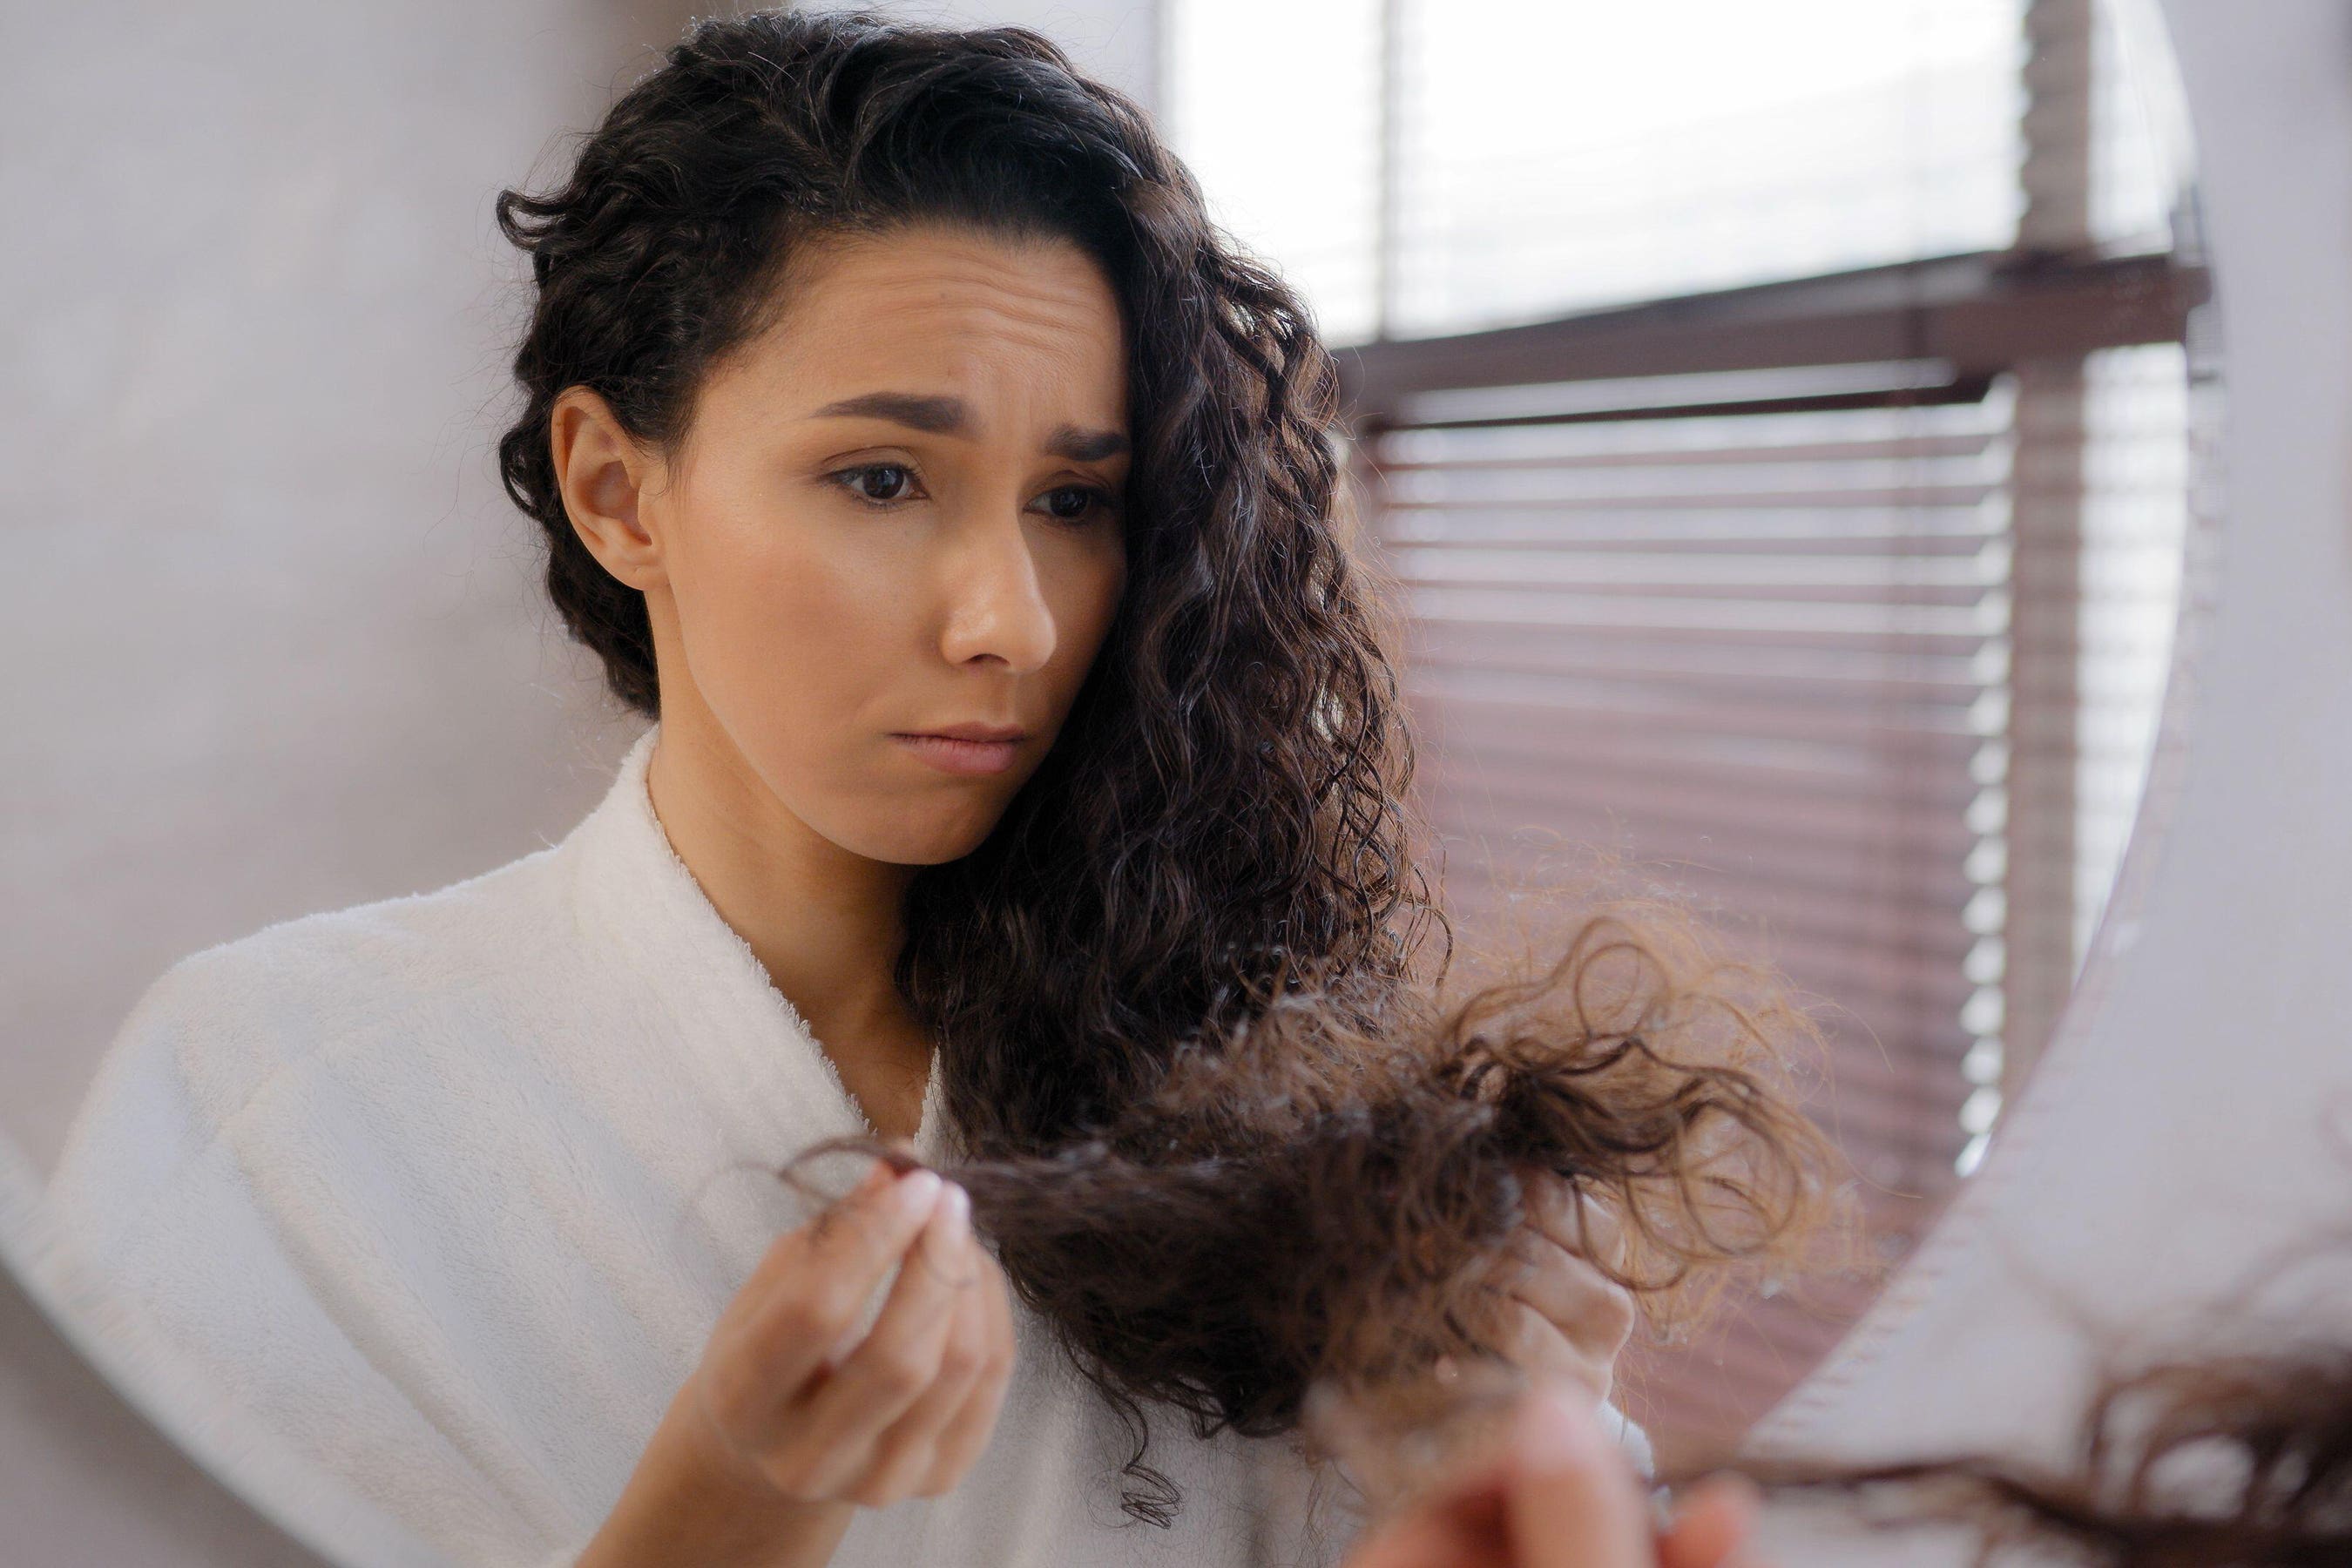 6 ways to make weak or damaged hair stronger | The Independent